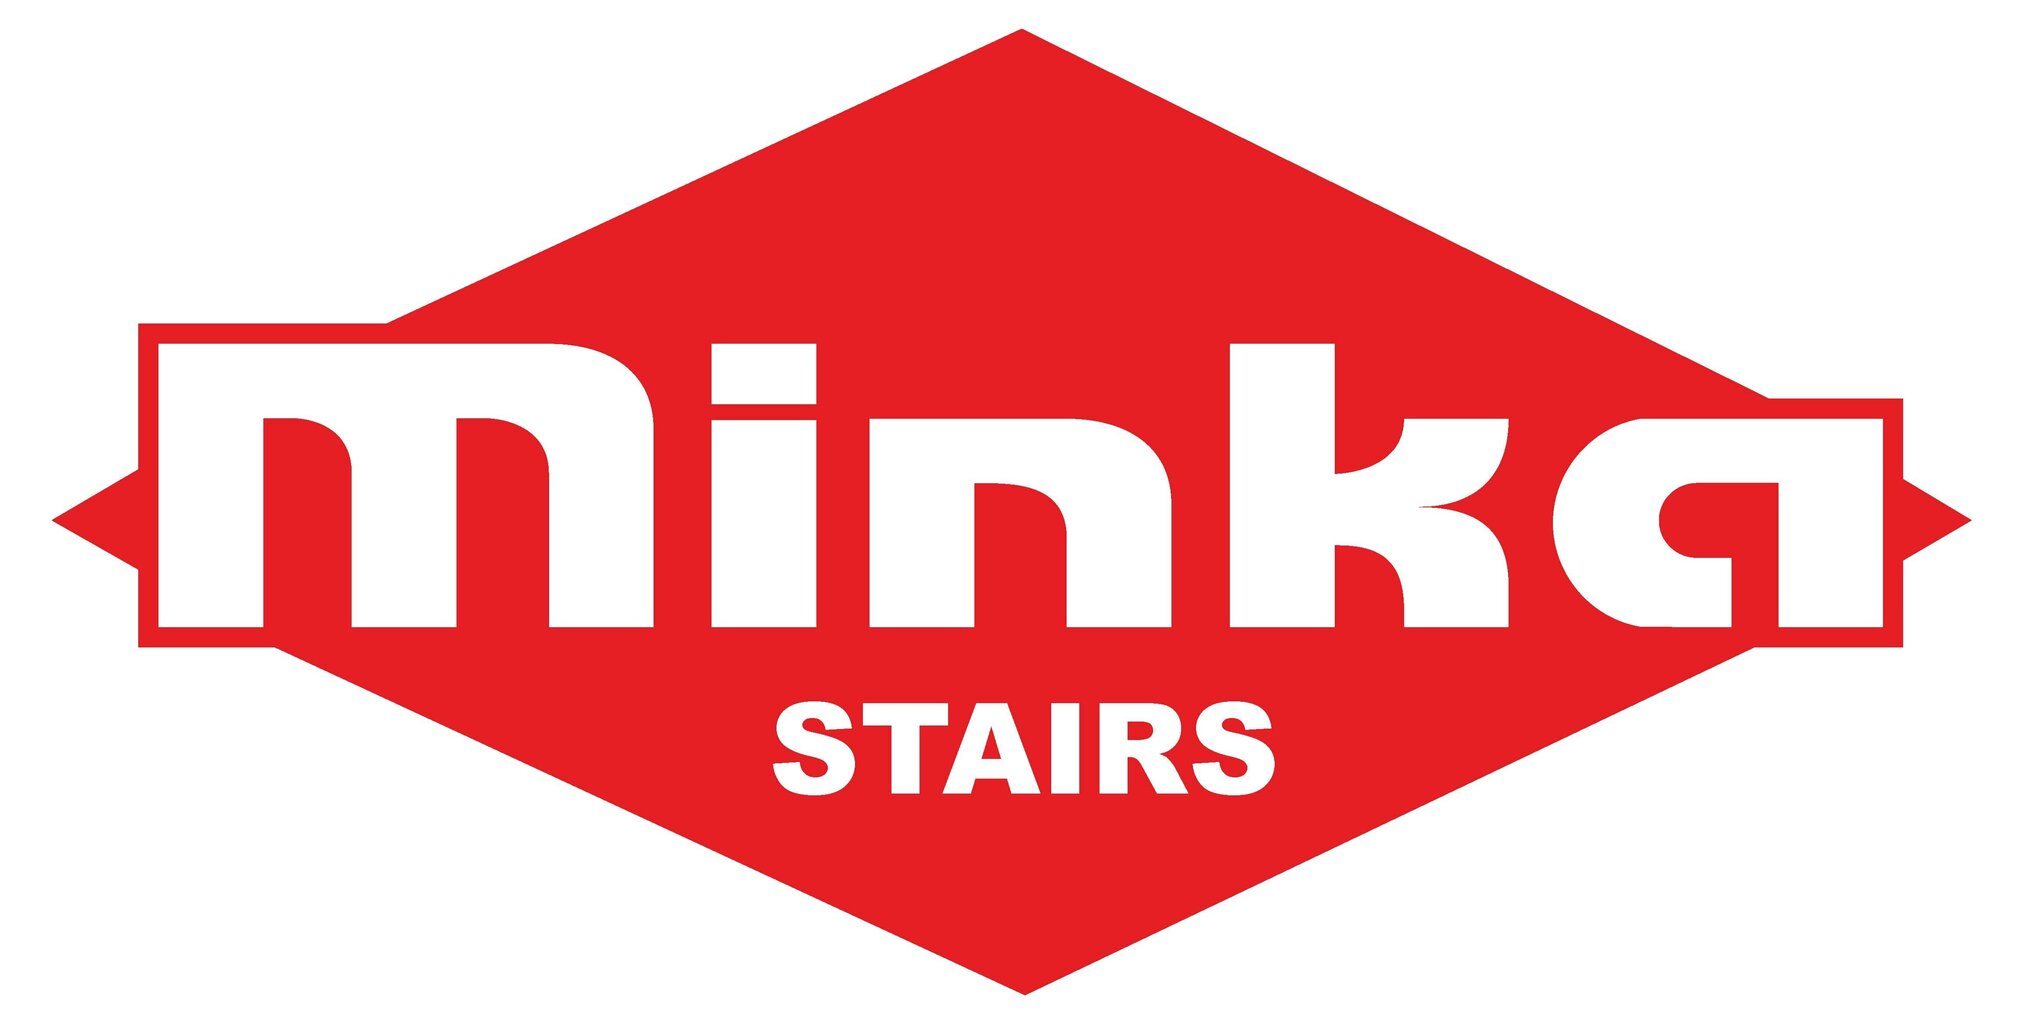 Laiptai Minka Strong 8,Balti, Aukštis 199 - 210 cm цена и информация | Laiptai | pigu.lt